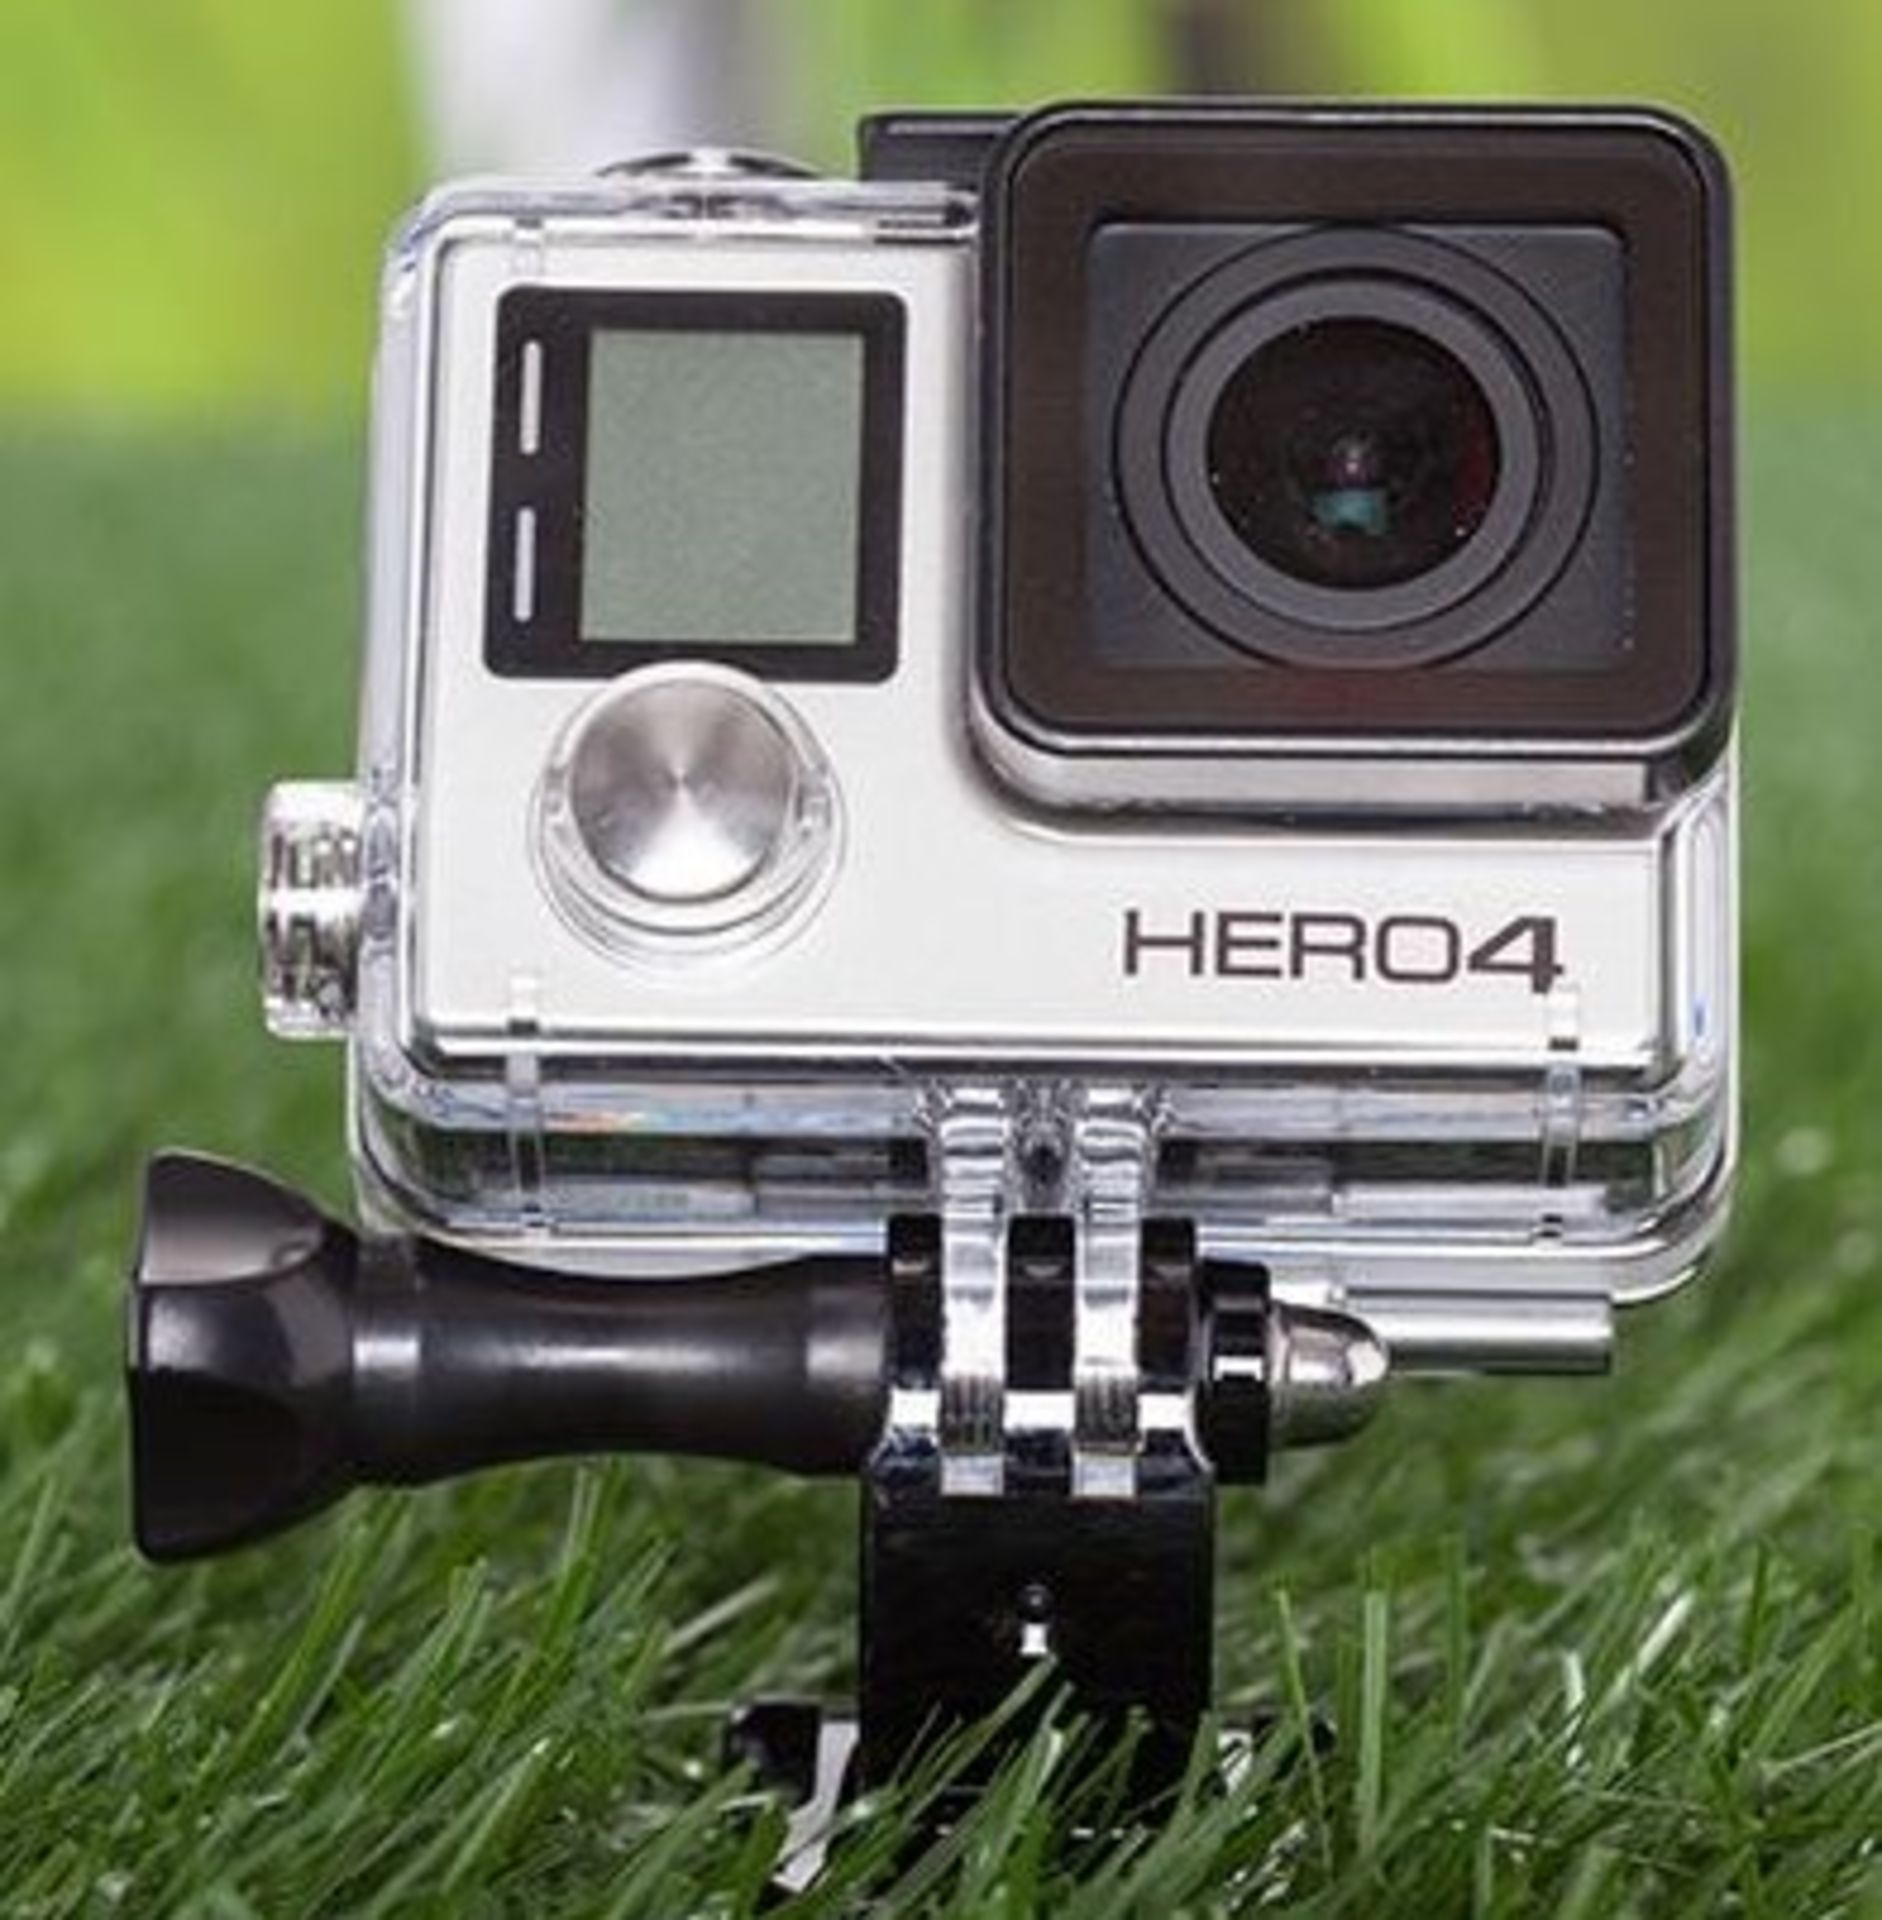 1 x Go Pro Hero 4 Action Video Camera - Full HD 12mp 4k Video Recorder - Includes 32gb SD Memory